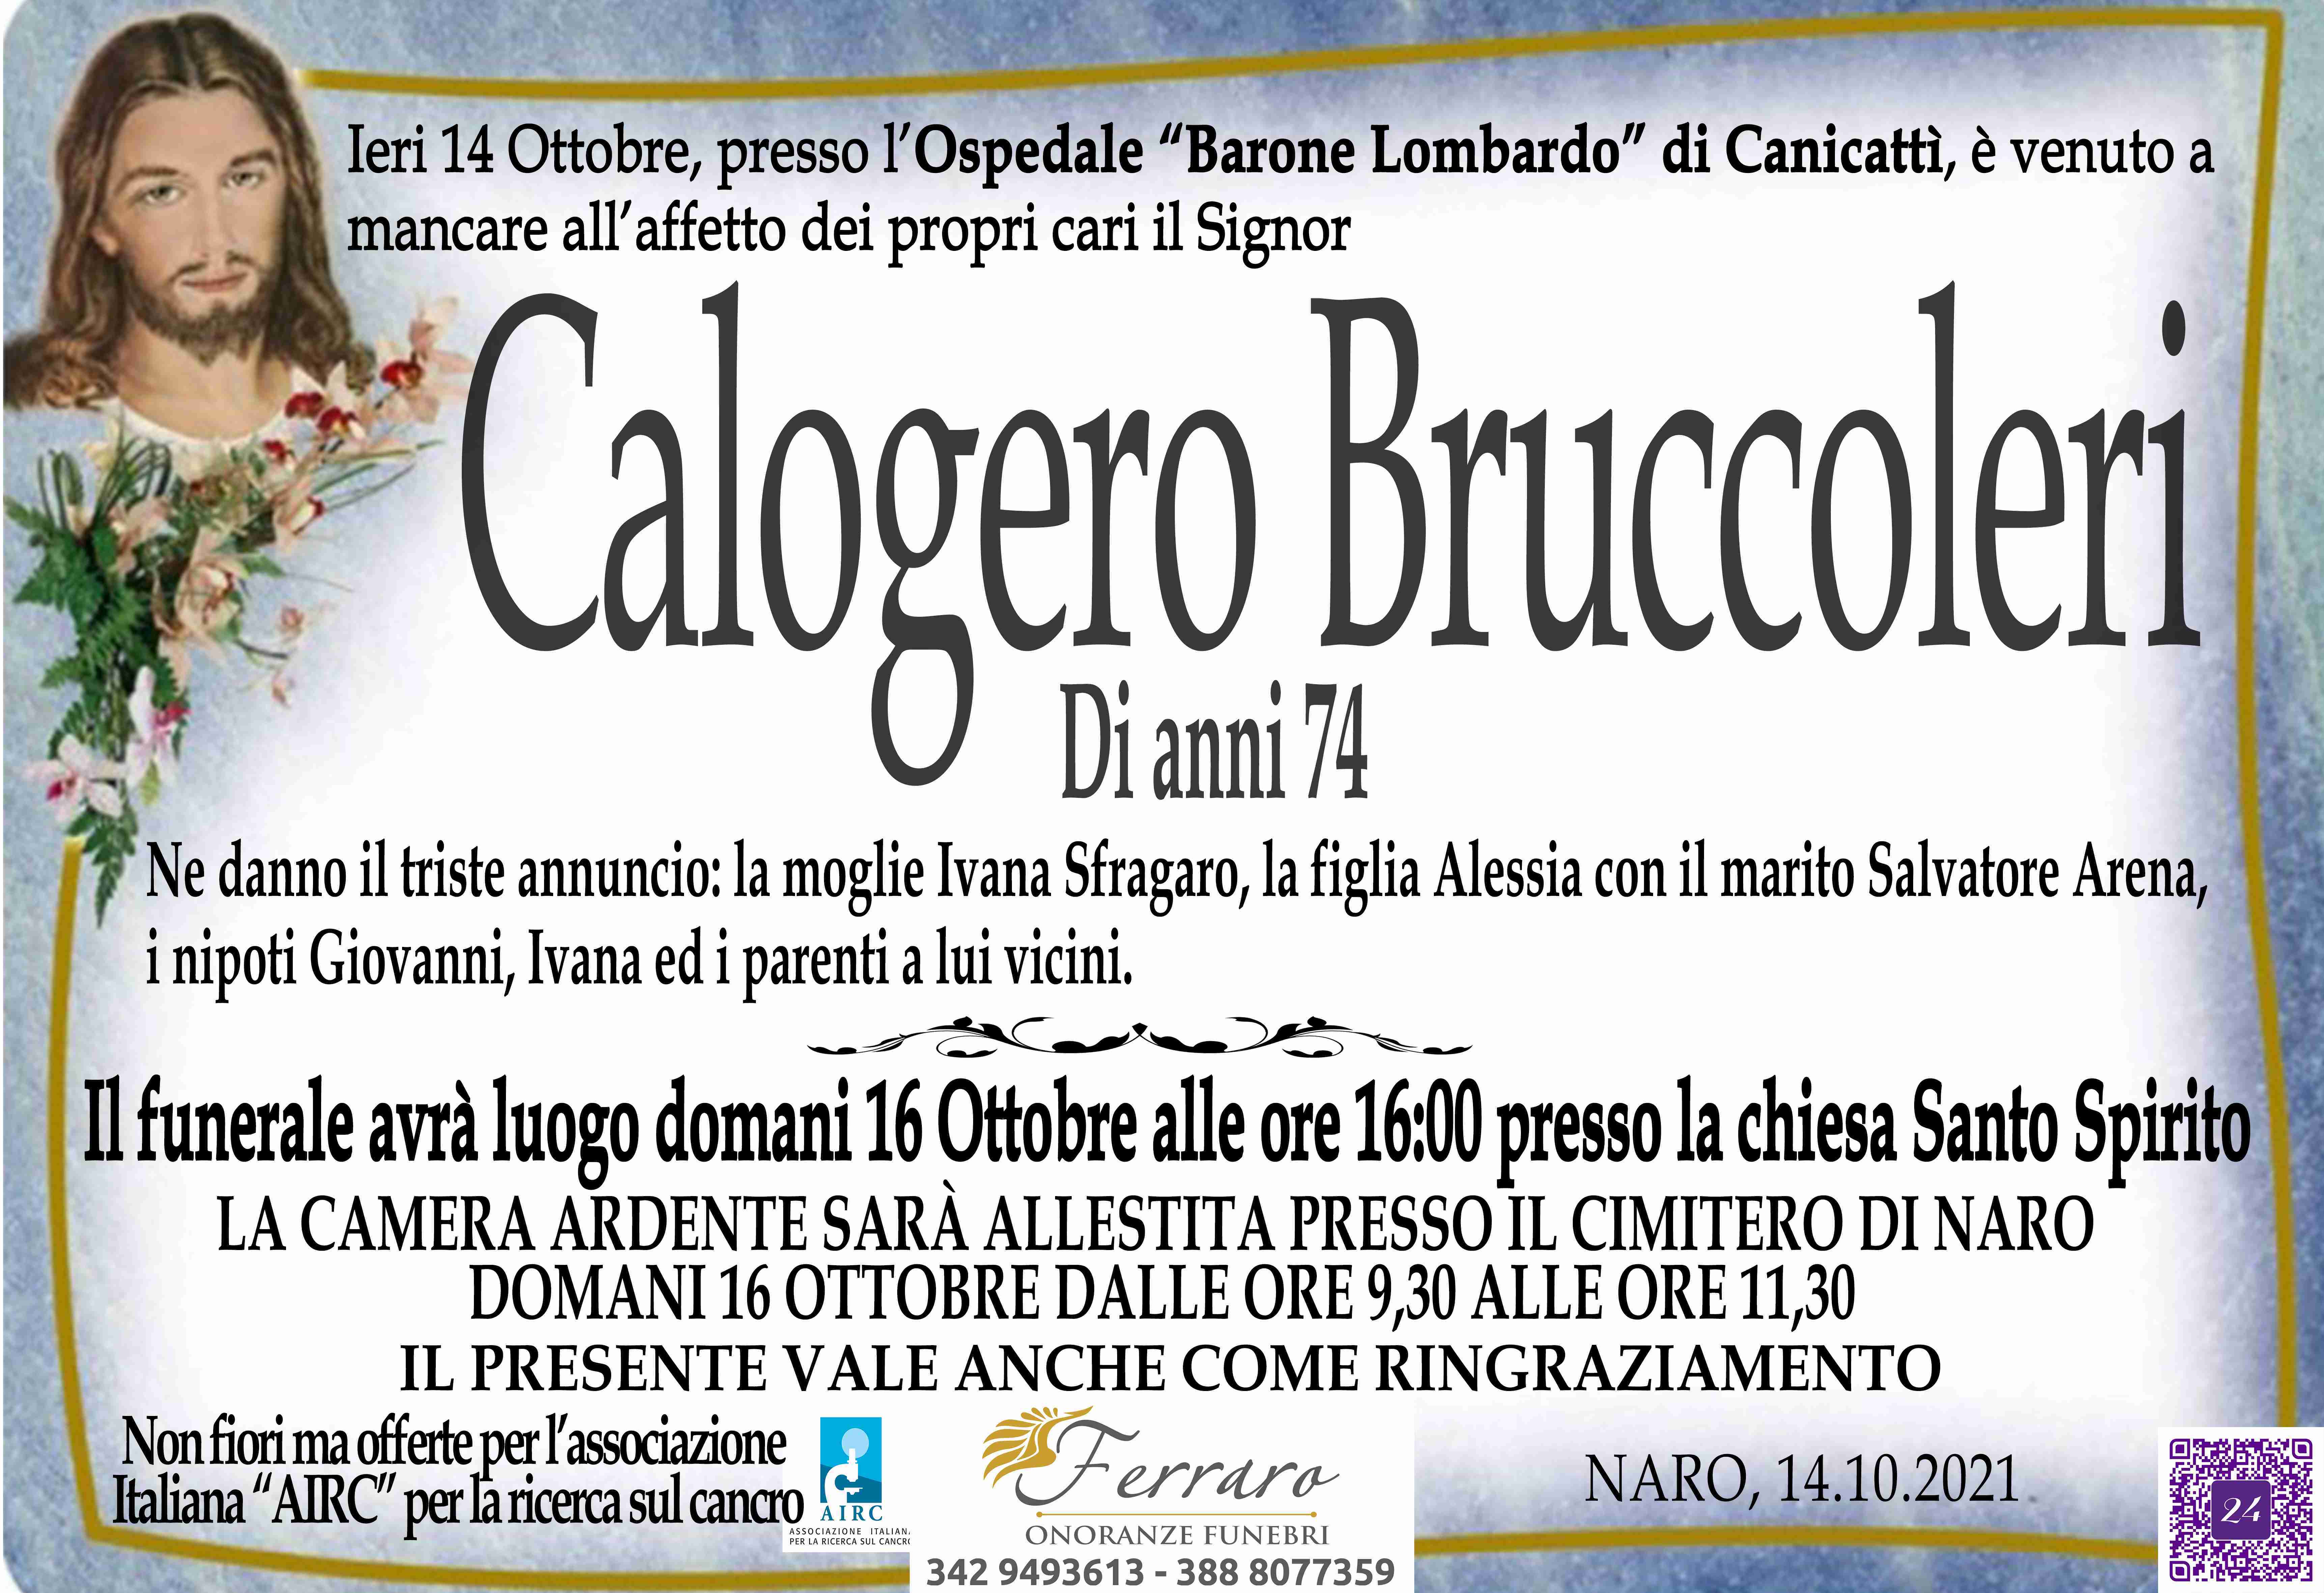 Calogero Bruccoleri